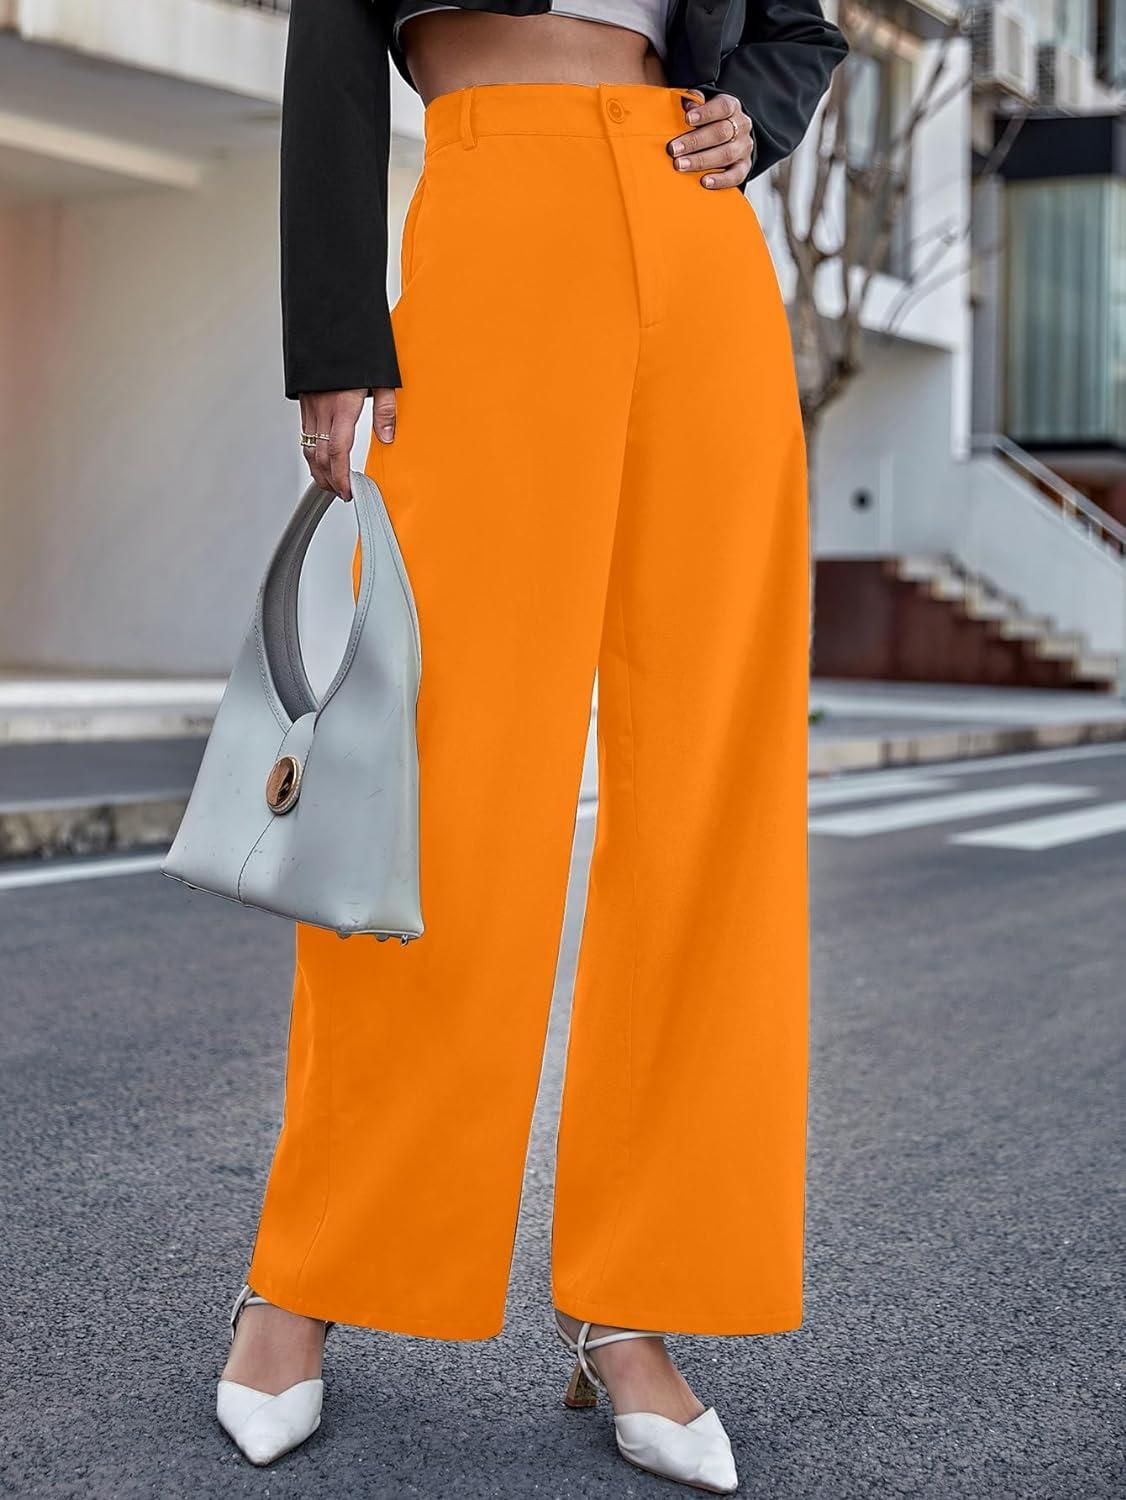 AAHWAN Women's Polyester Solid High Waist Trouser